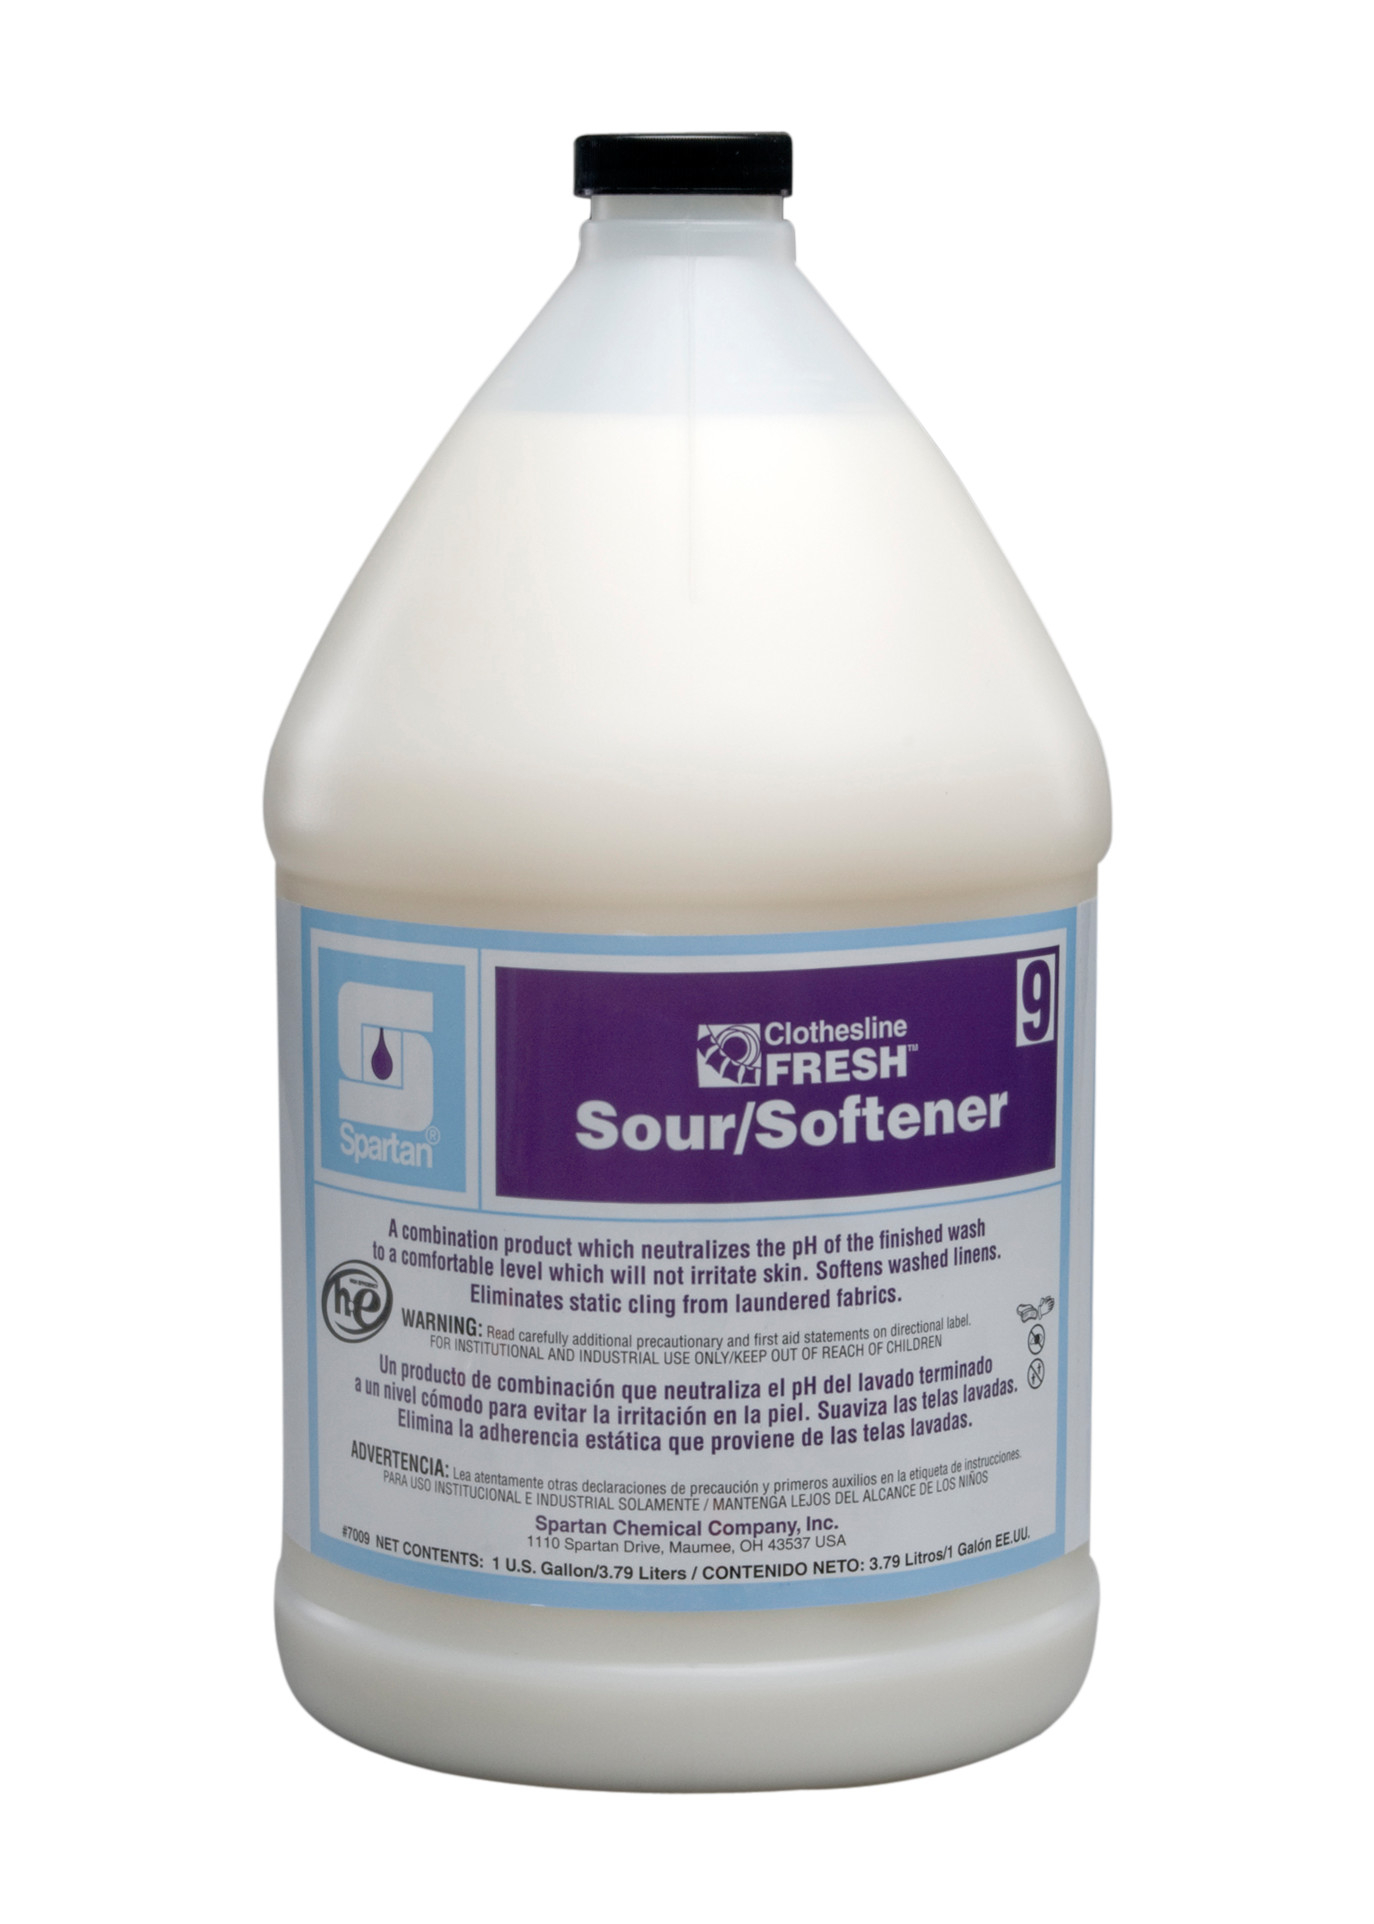 Spartan Chemical Company Clothesline Fresh Sour/Softener 9, 1 GAL 4/CSE